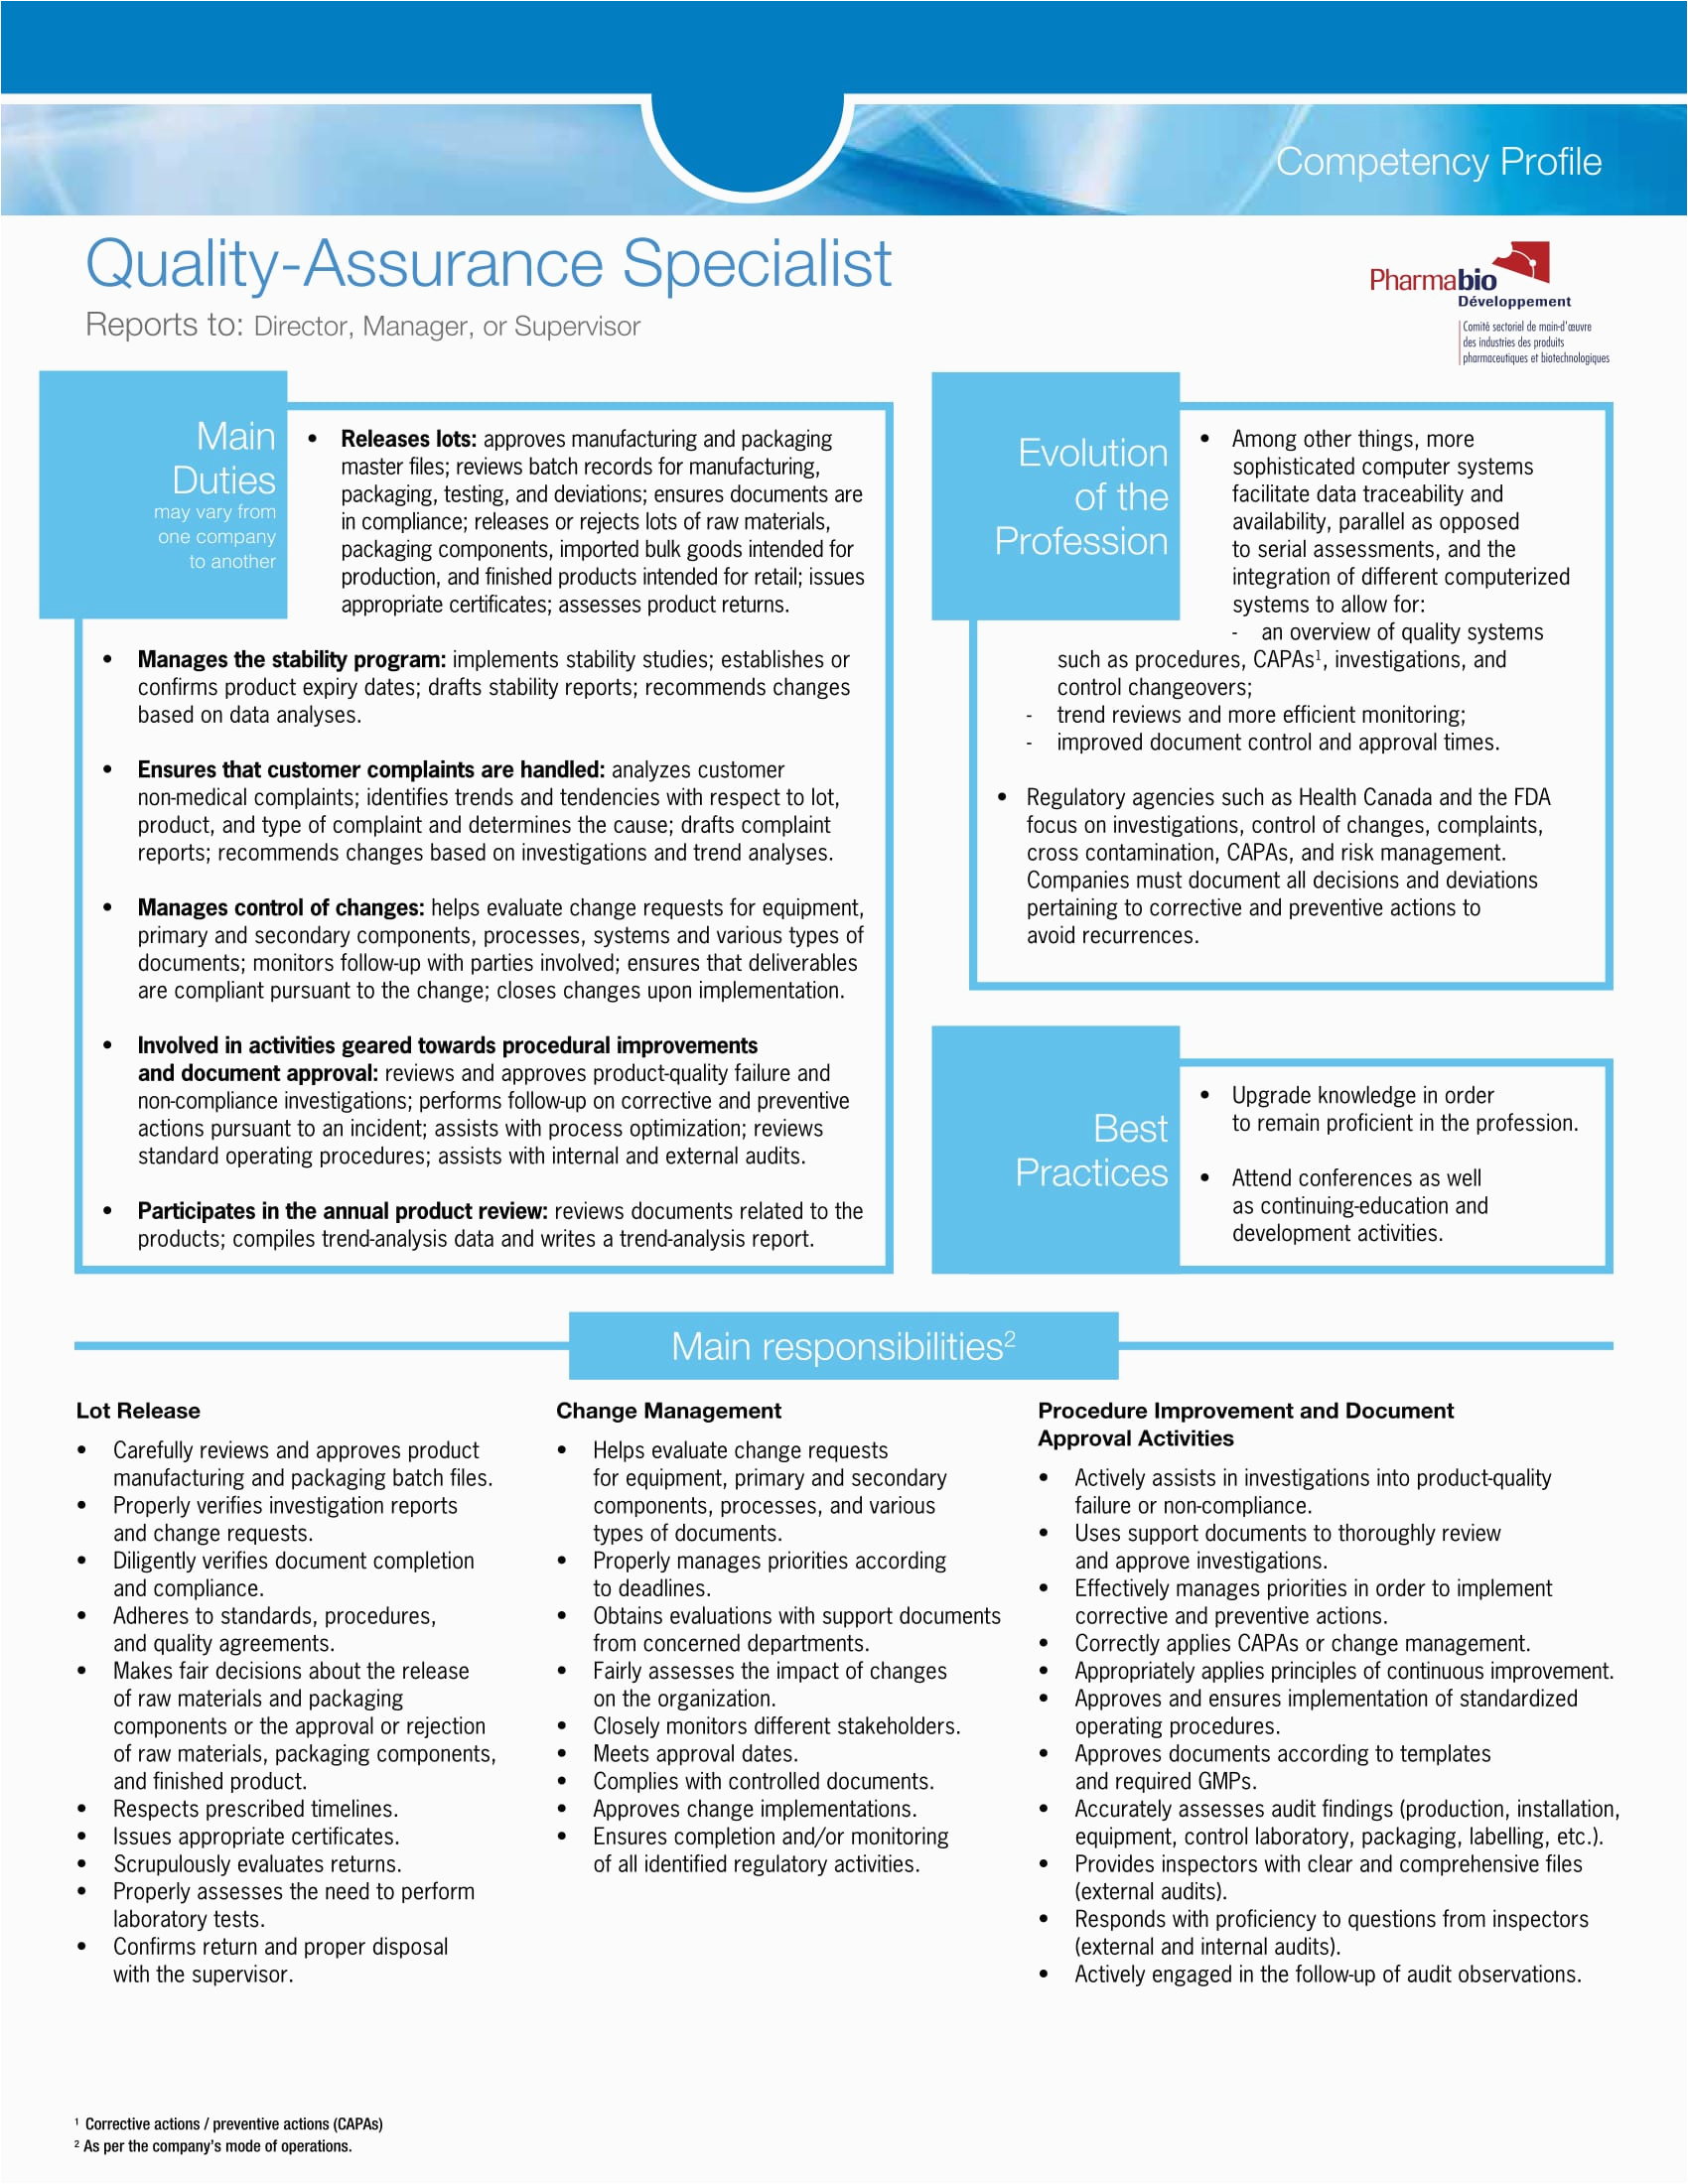 Pharmaceutical Resume Samples for Quality assurance 14 Awesome Quality assurance Resume Sample Templates